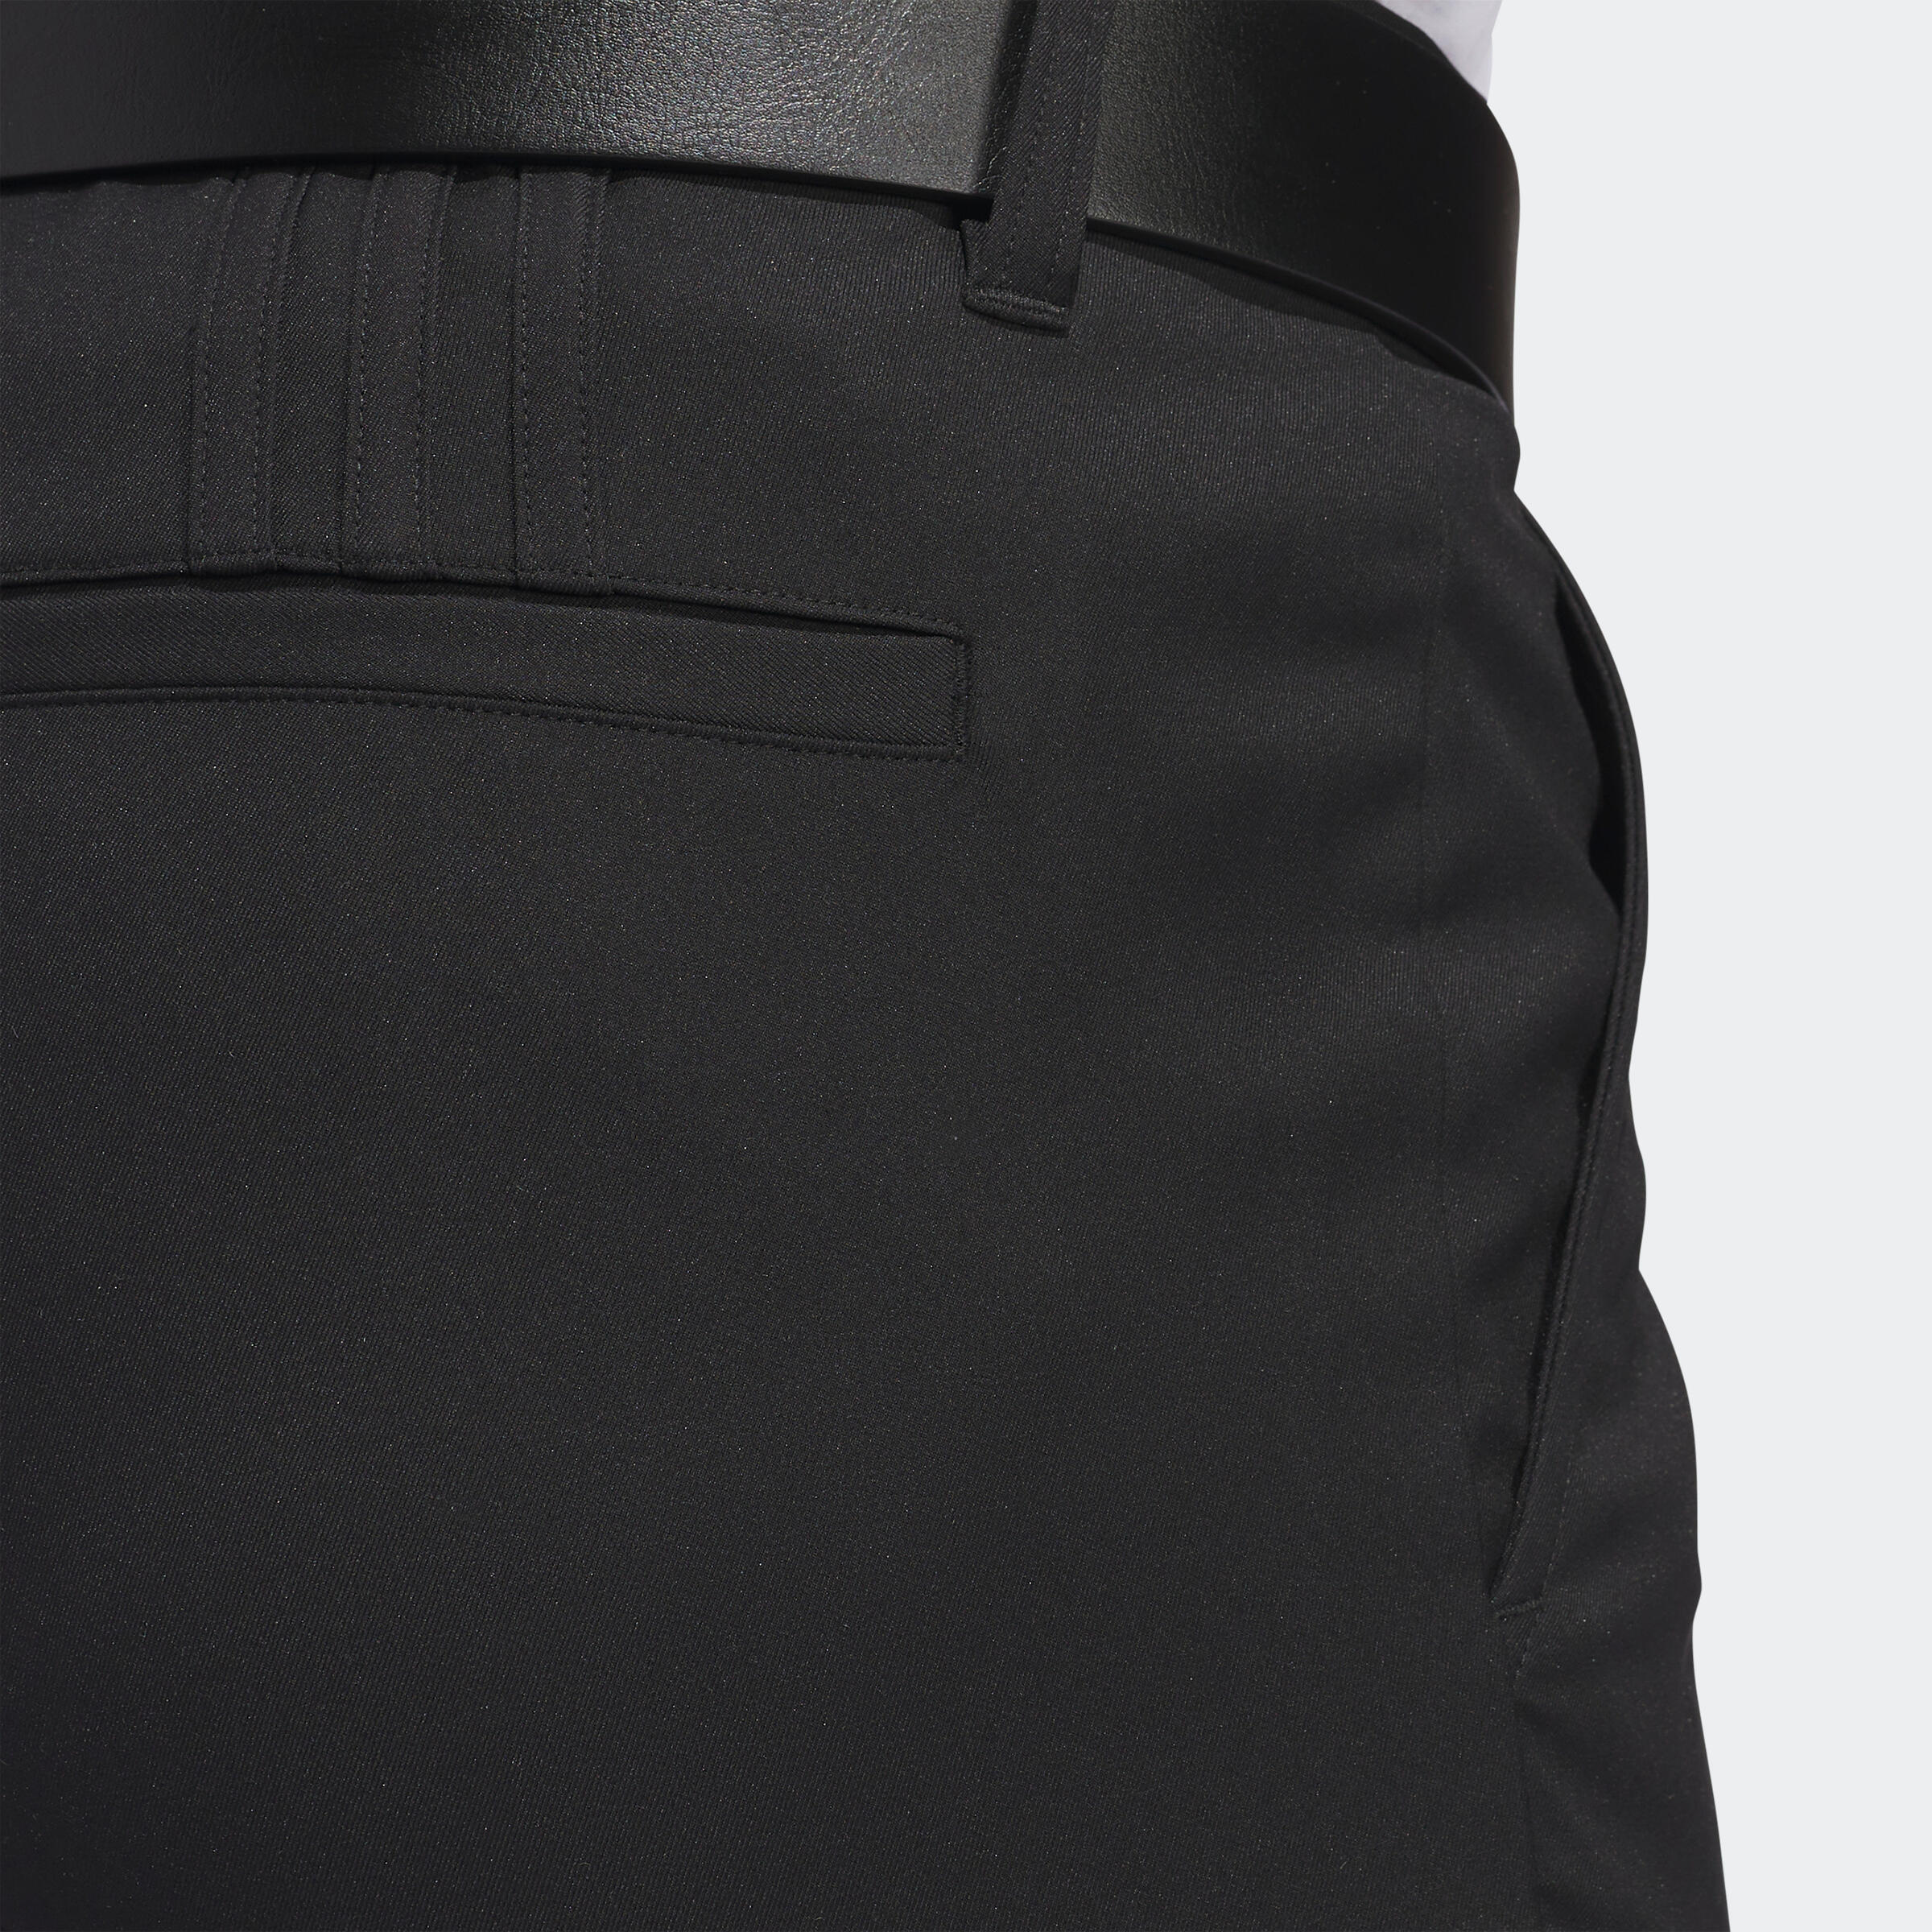 Men's golf trousers - Adidas black 3/4